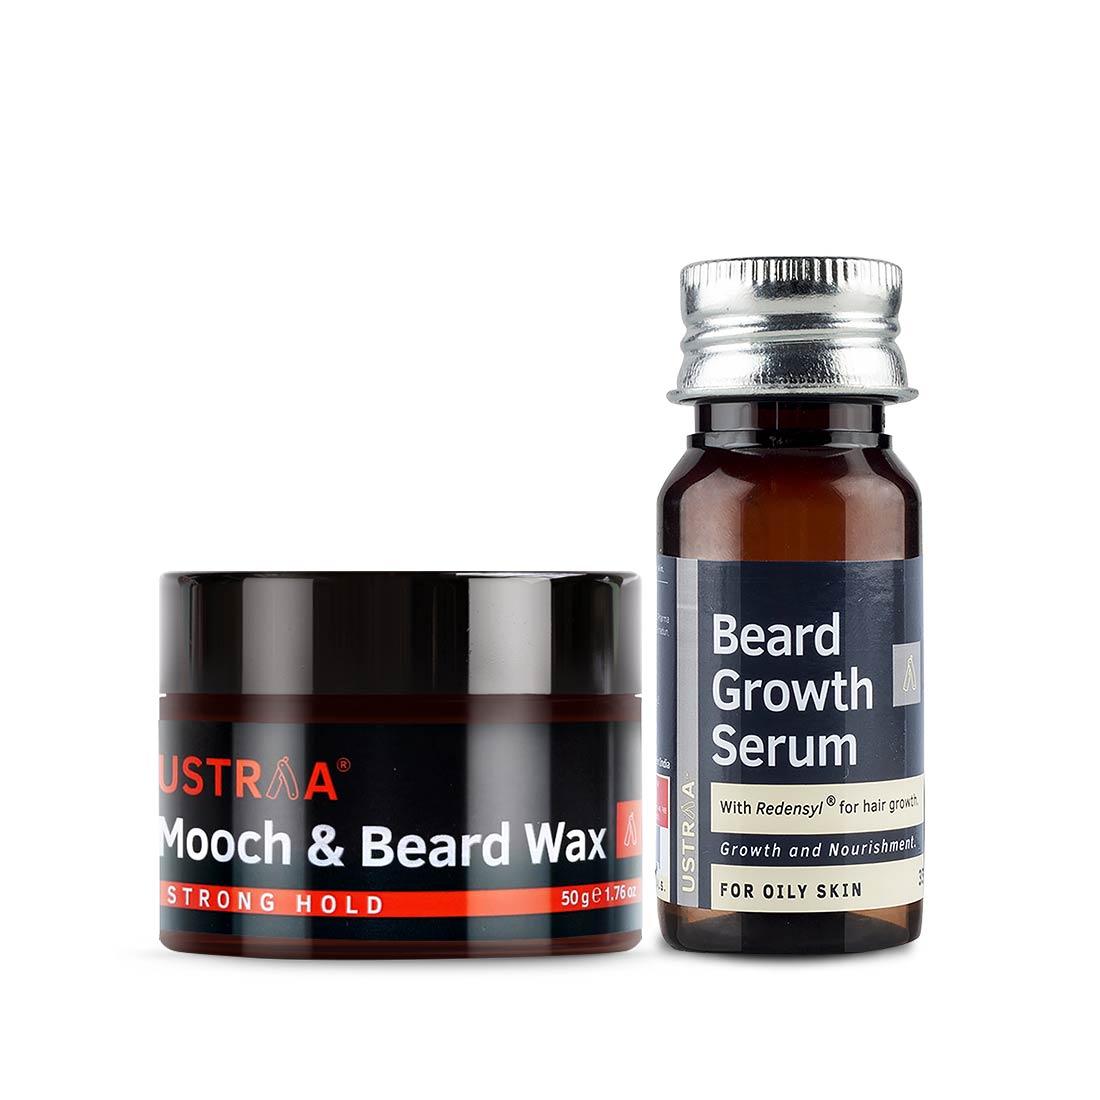 Beard Growth Serum and Beard and Mooch Styling Wax